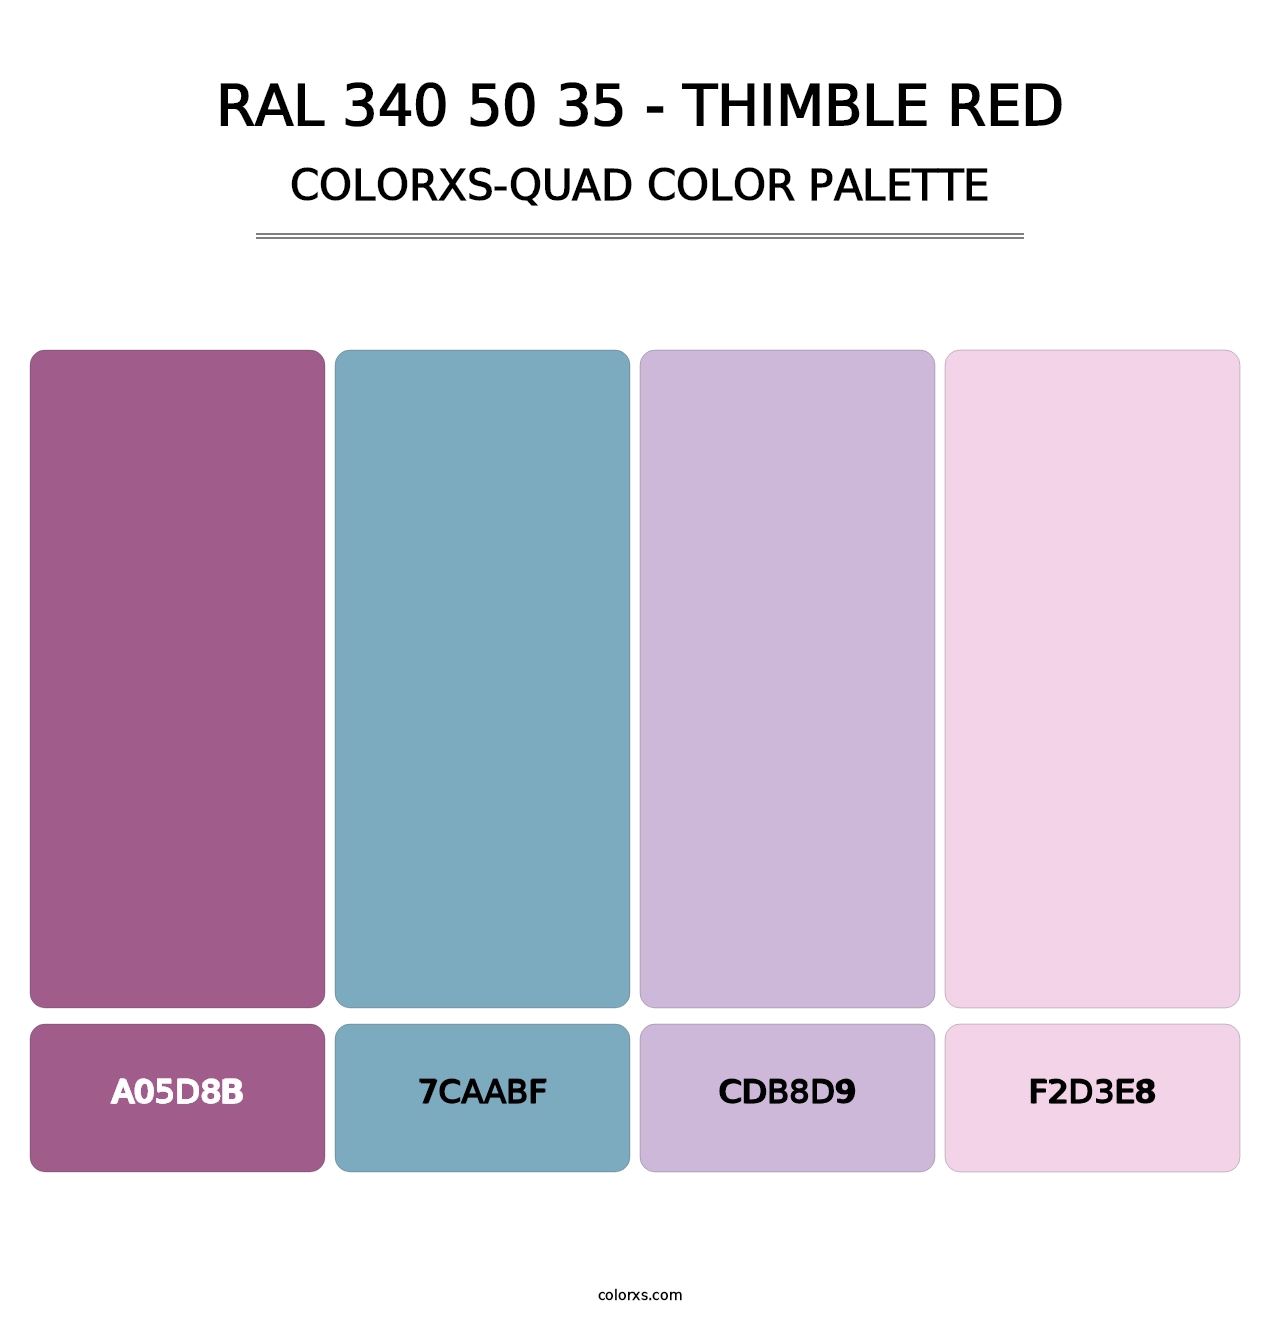 RAL 340 50 35 - Thimble Red - Colorxs Quad Palette